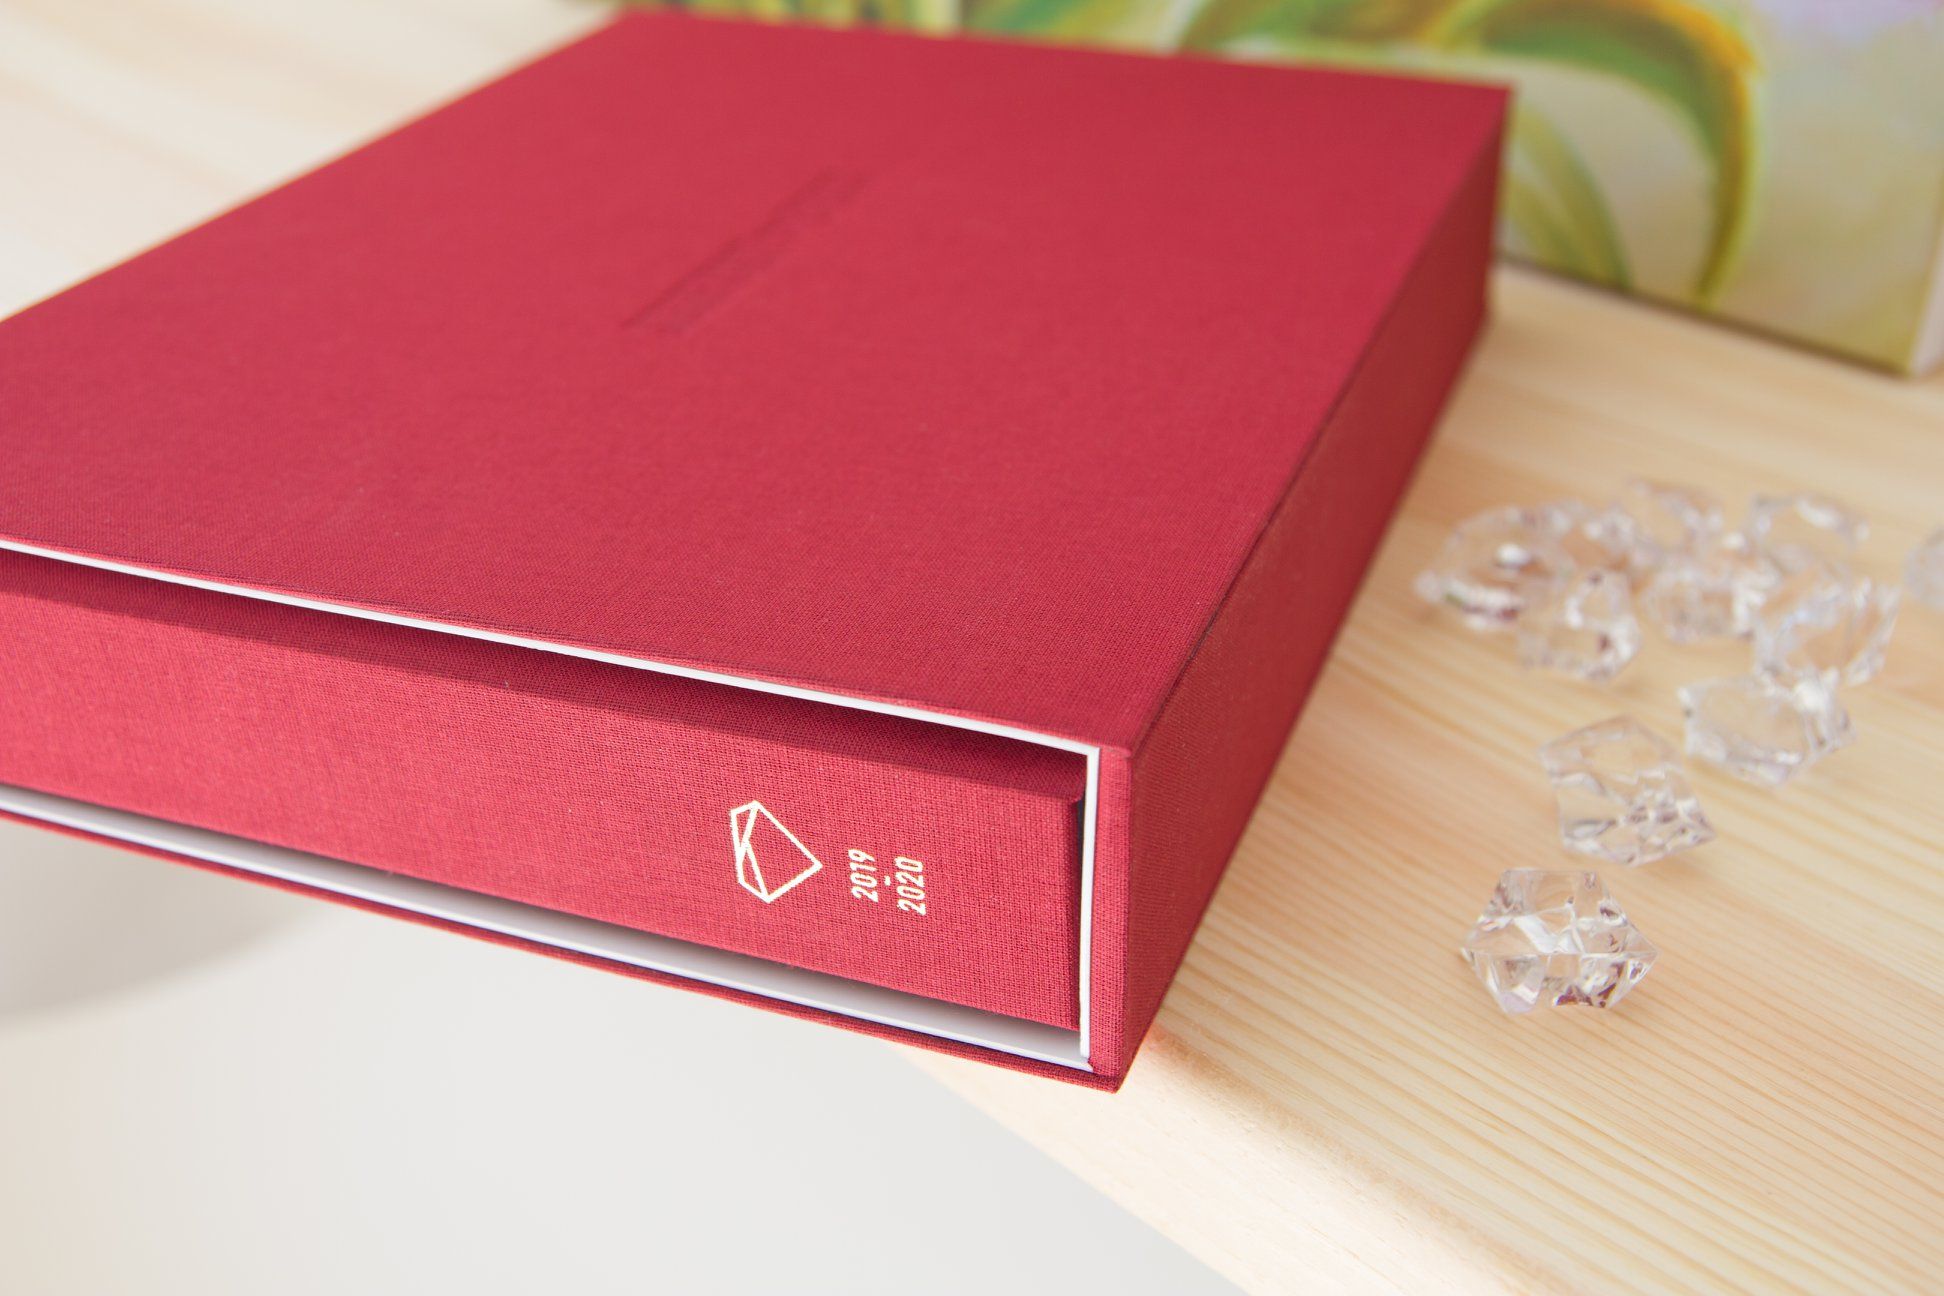 Examples of wedding photo books. Printing & design service. Photo 93376 (2023-05-04 04:08:56)